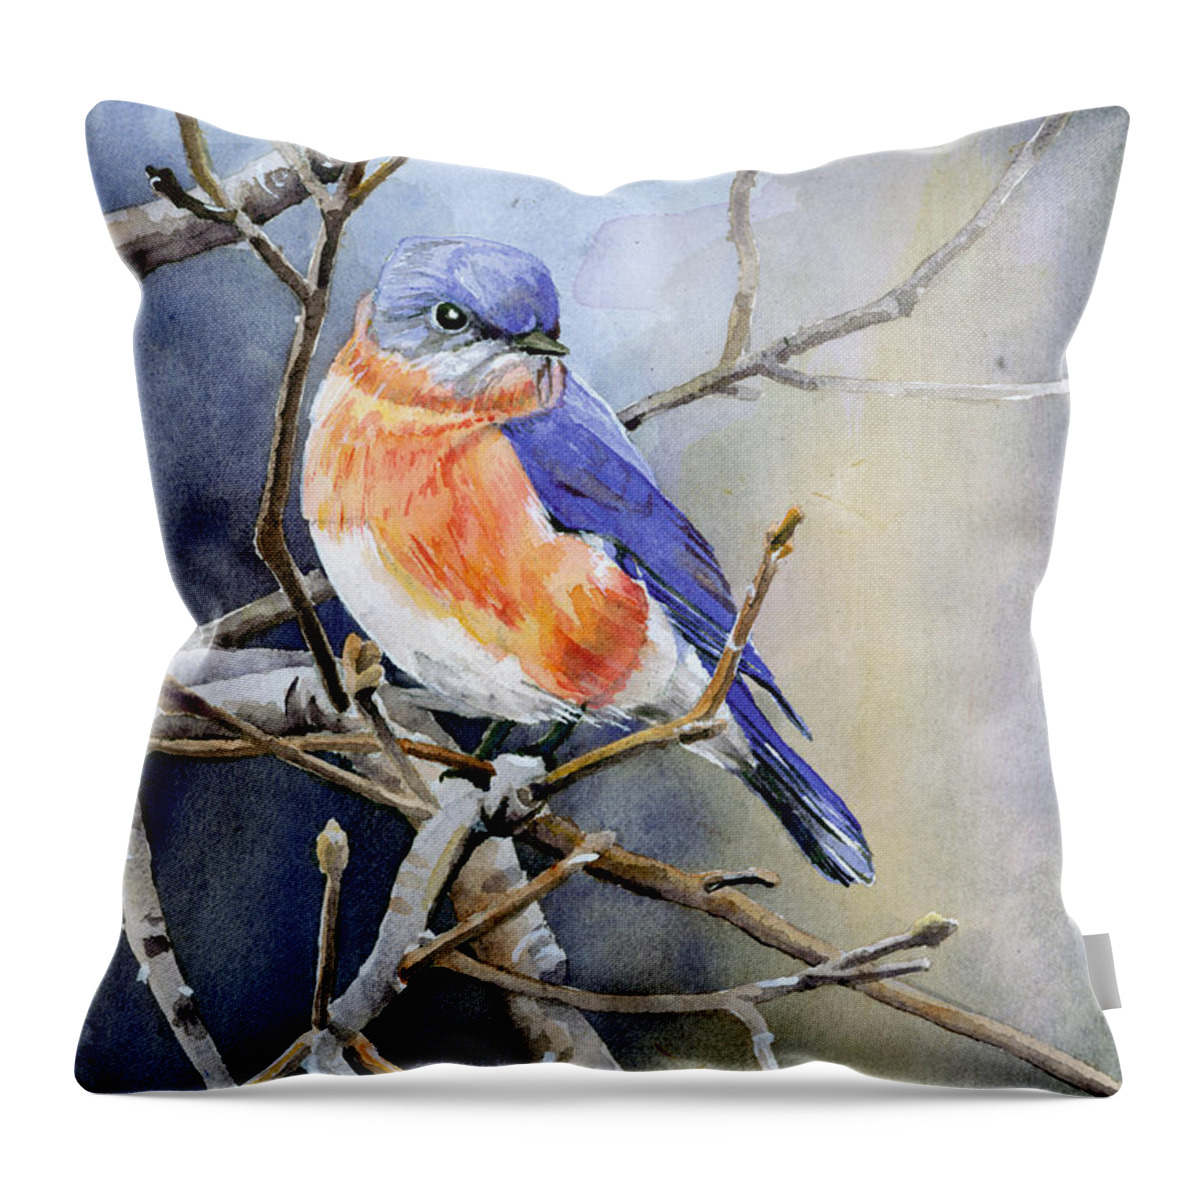 Wildlife Throw Pillow featuring the painting Eastern Bluebird 2 by Steve Hamlin